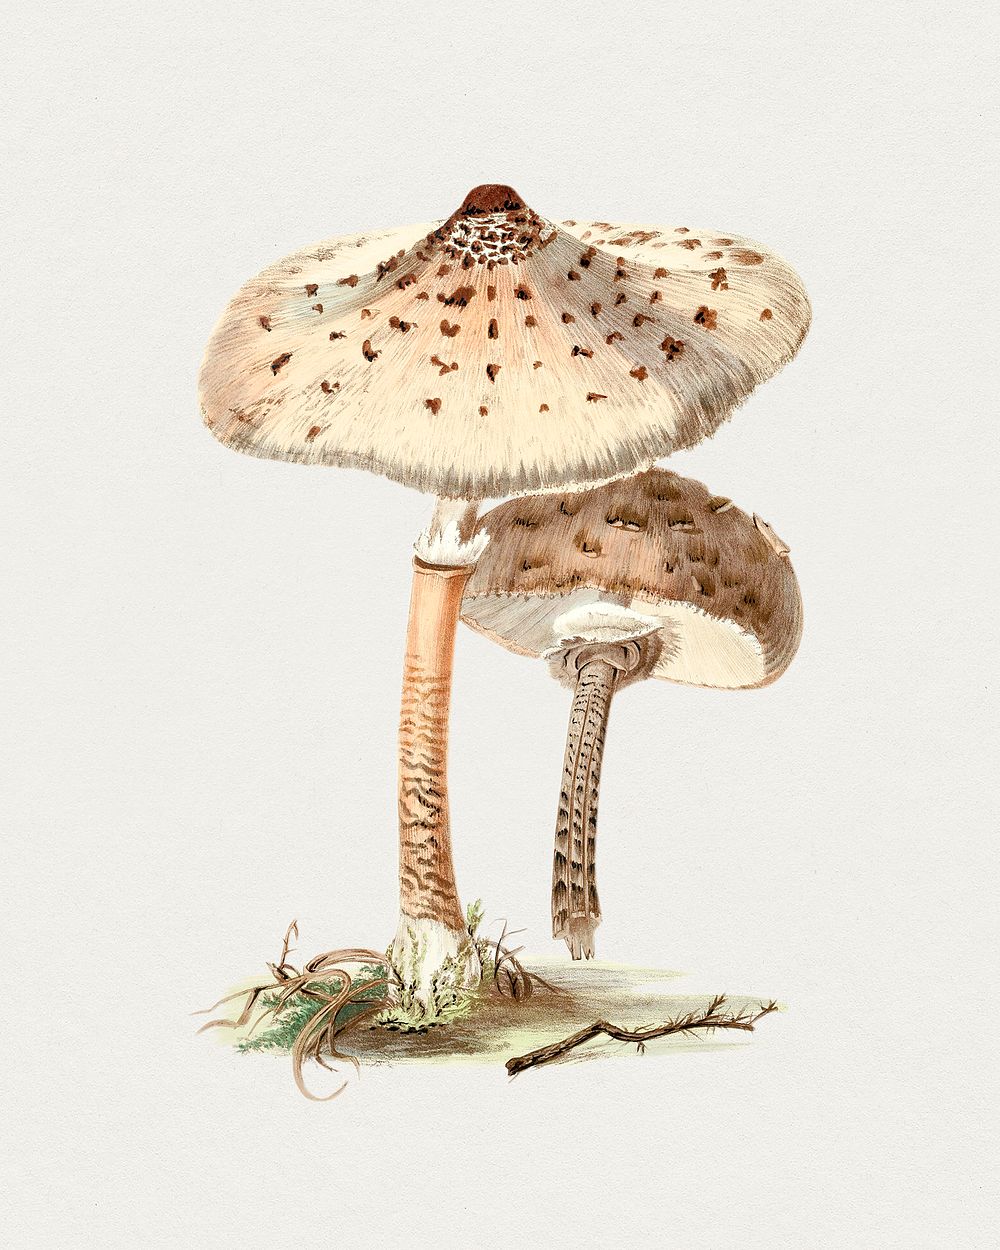 Hand drawn parasol mushroom. Original from Biodiversity Heritage Library. Digitally enhanced by rawpixel.